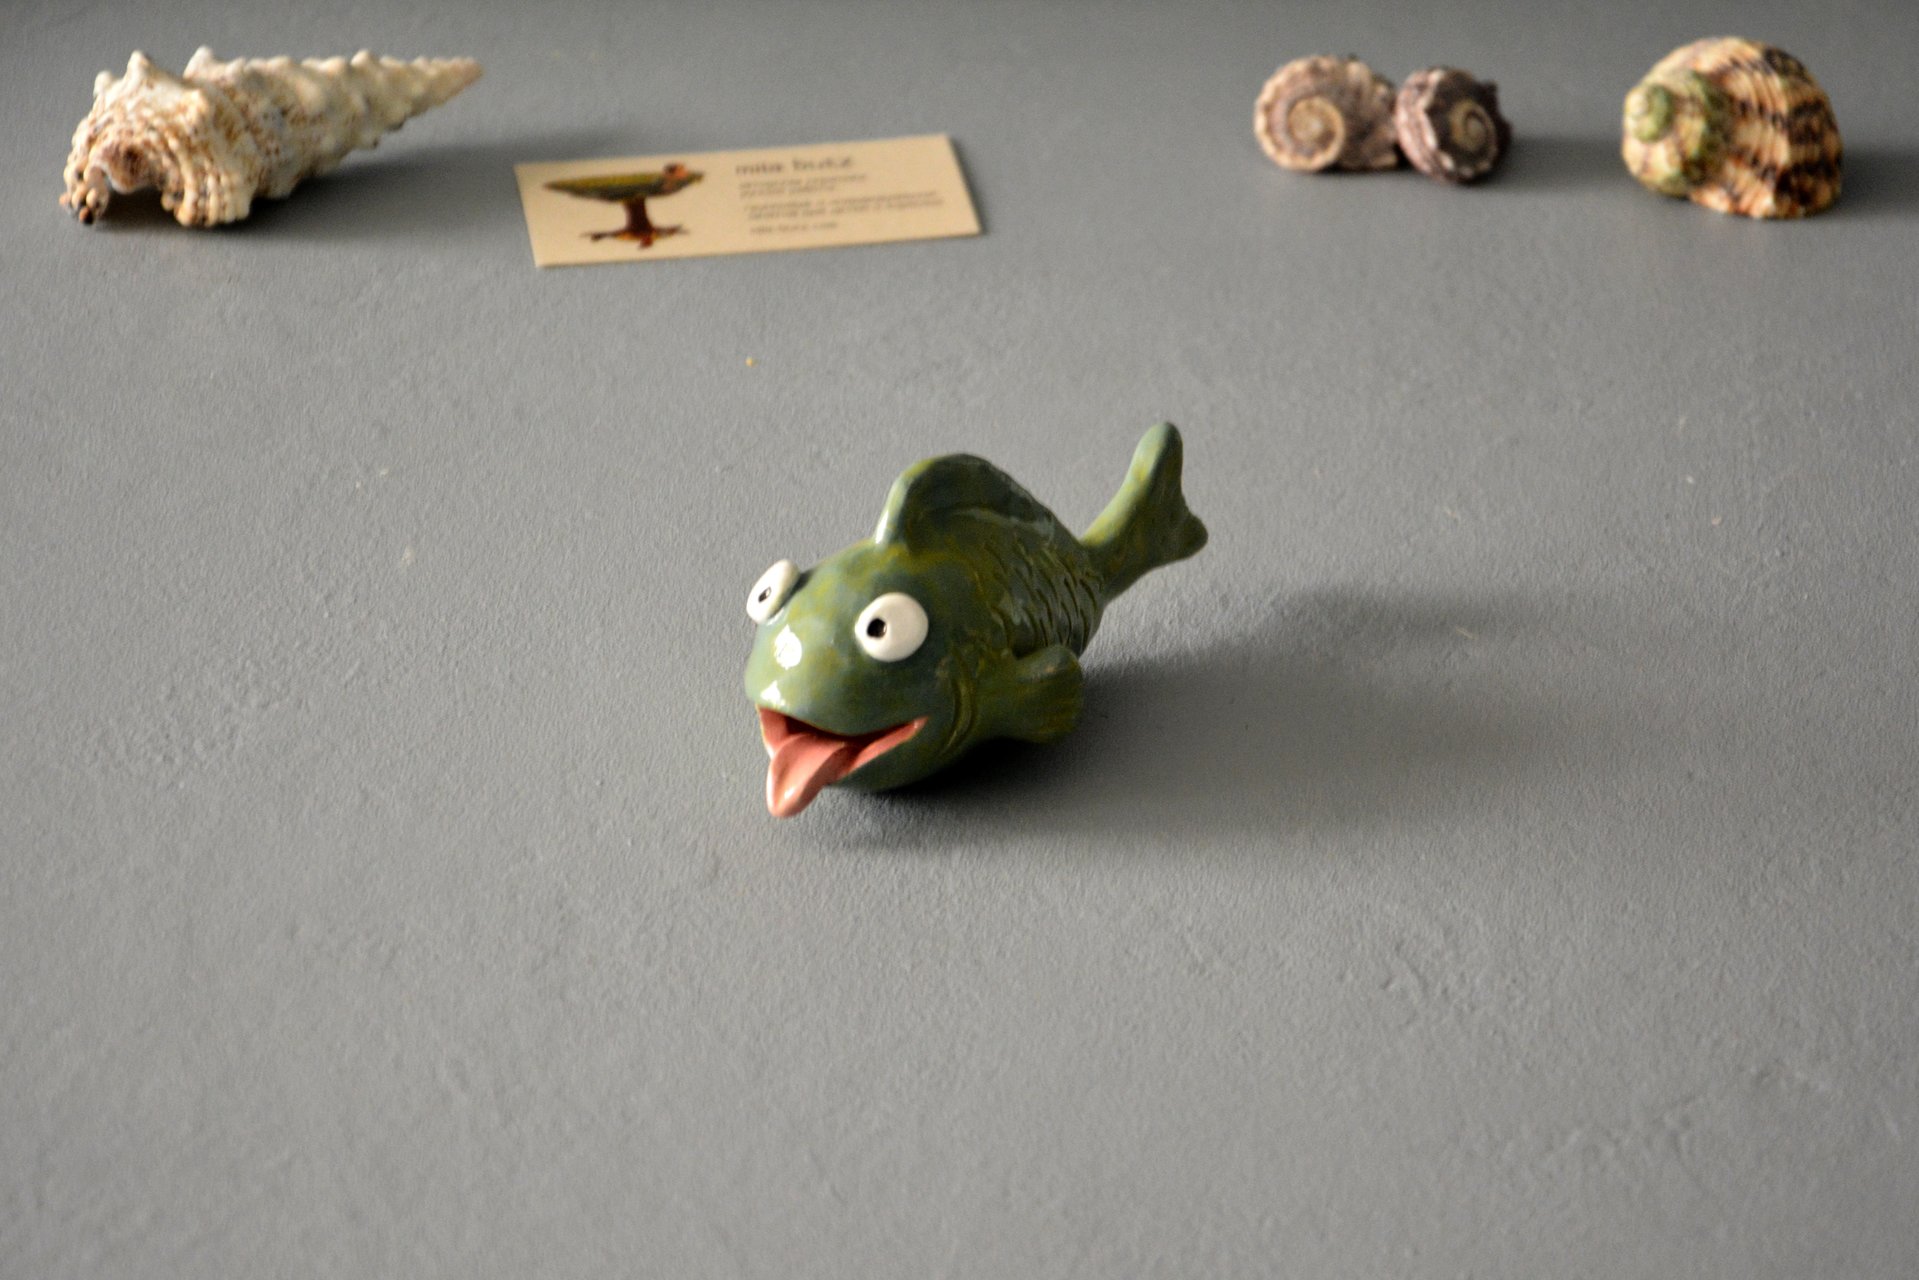 Ceramic fish figurine smiling, length - 12.5 cm, height - 6 cm, photo 2 of 6.